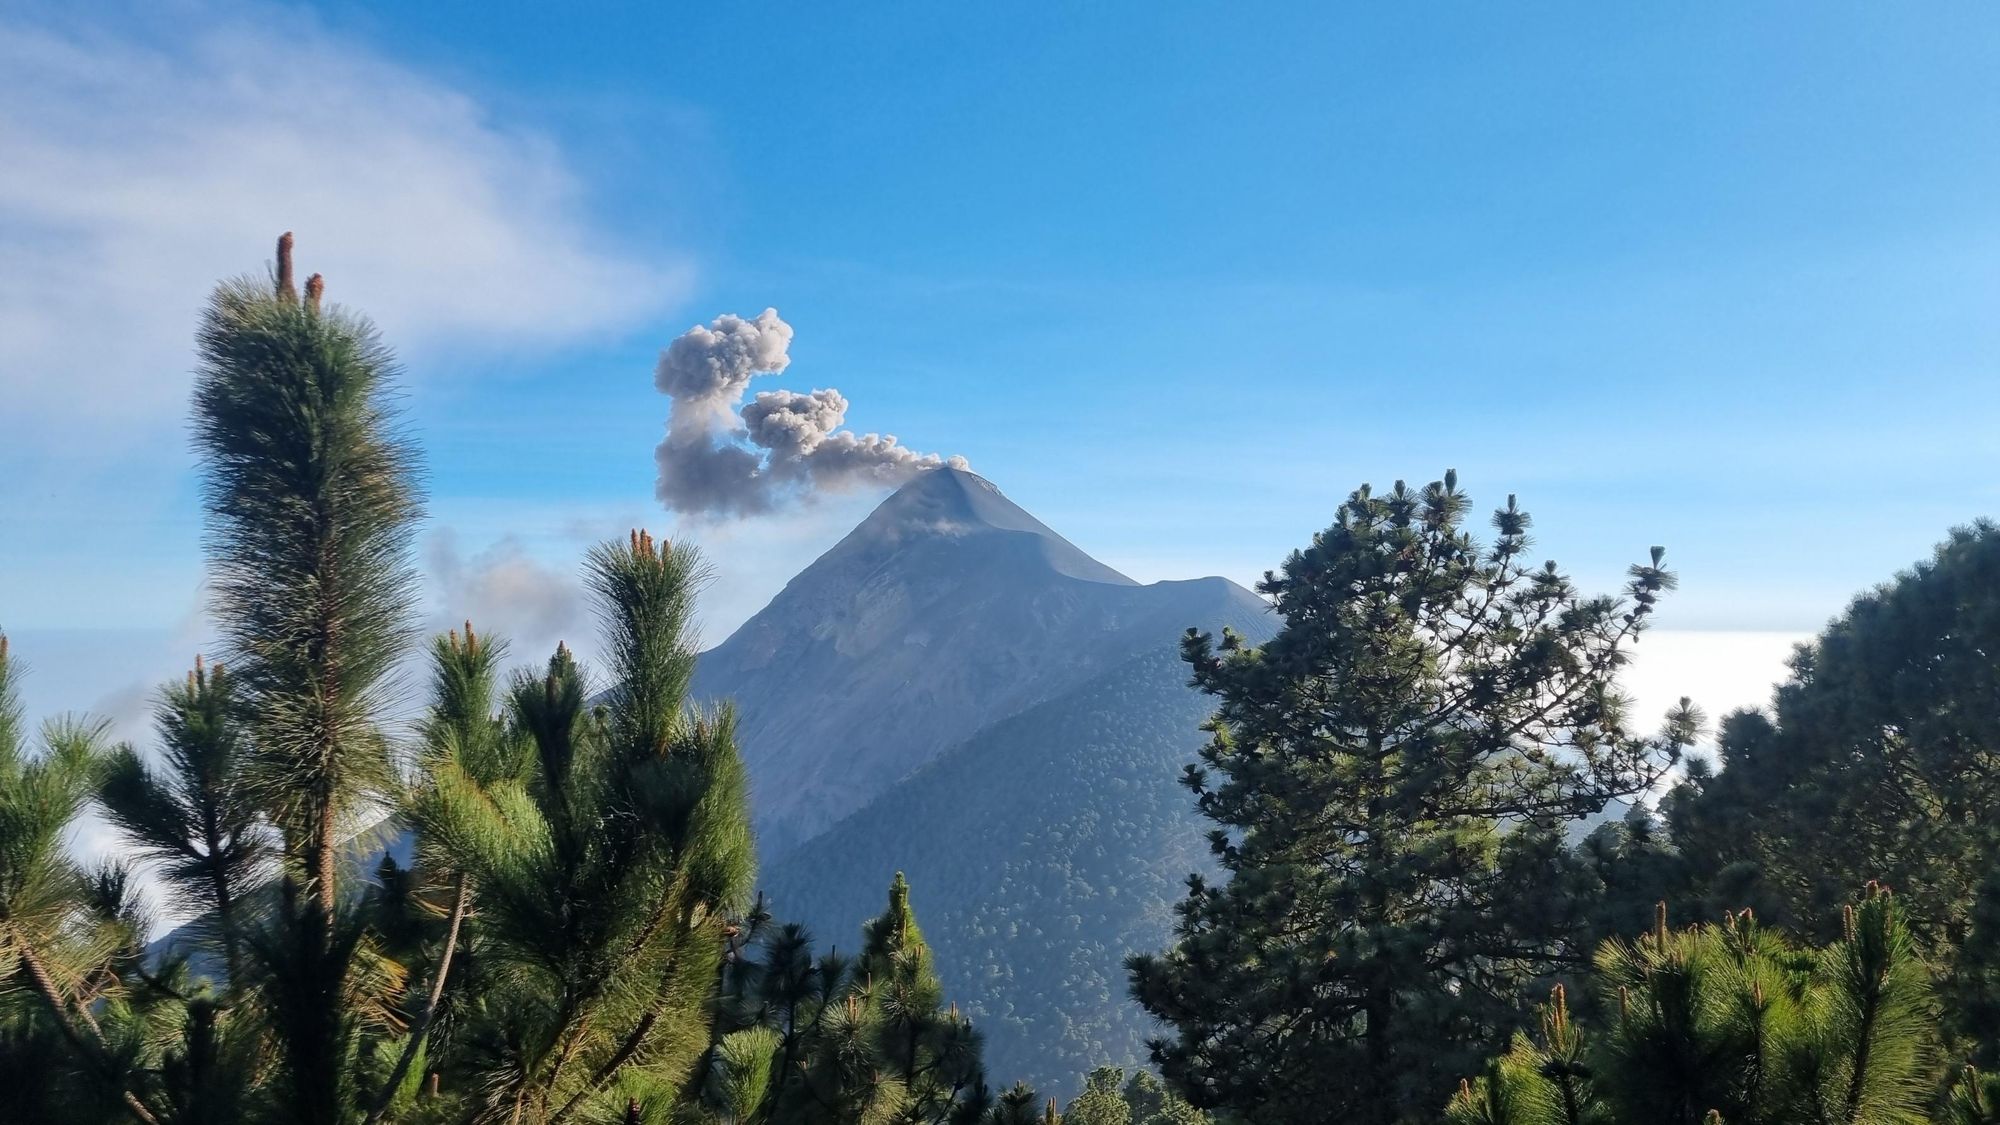 Volcan de Fuego glimpsed through the trees on Acatenango Volcano. Photo: Marta Marinelli.